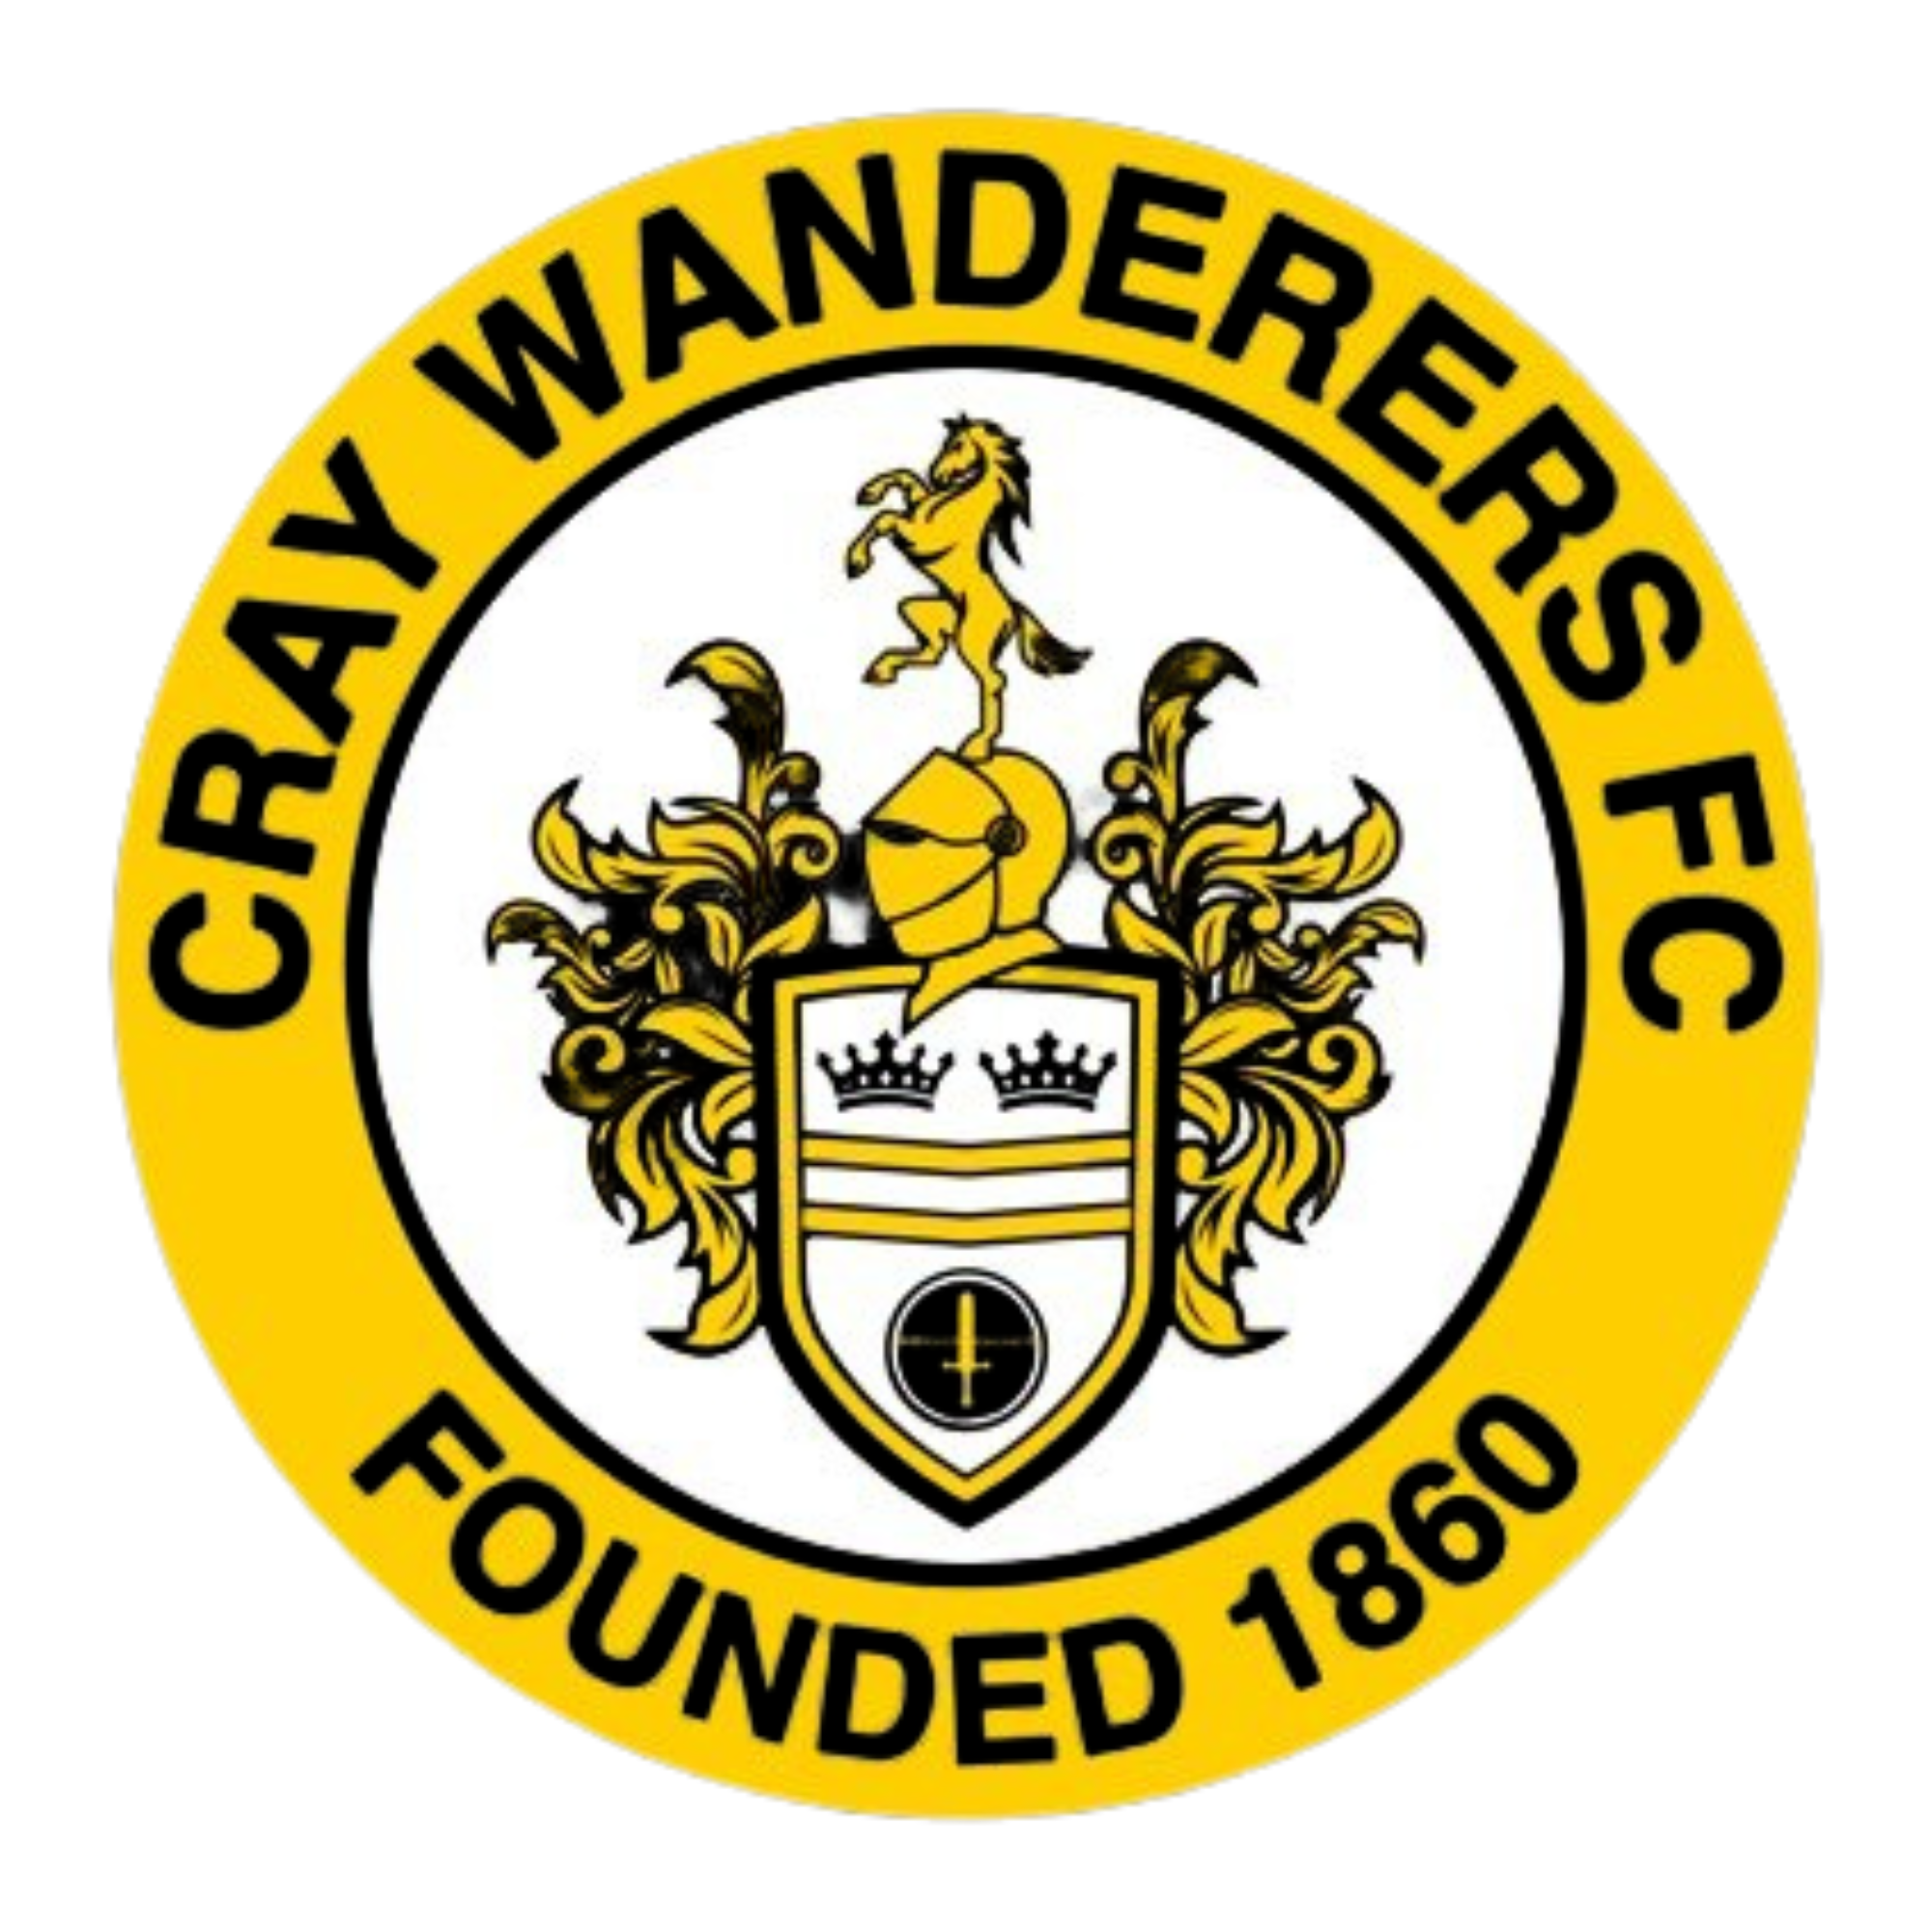 Cray Wanderers u23s